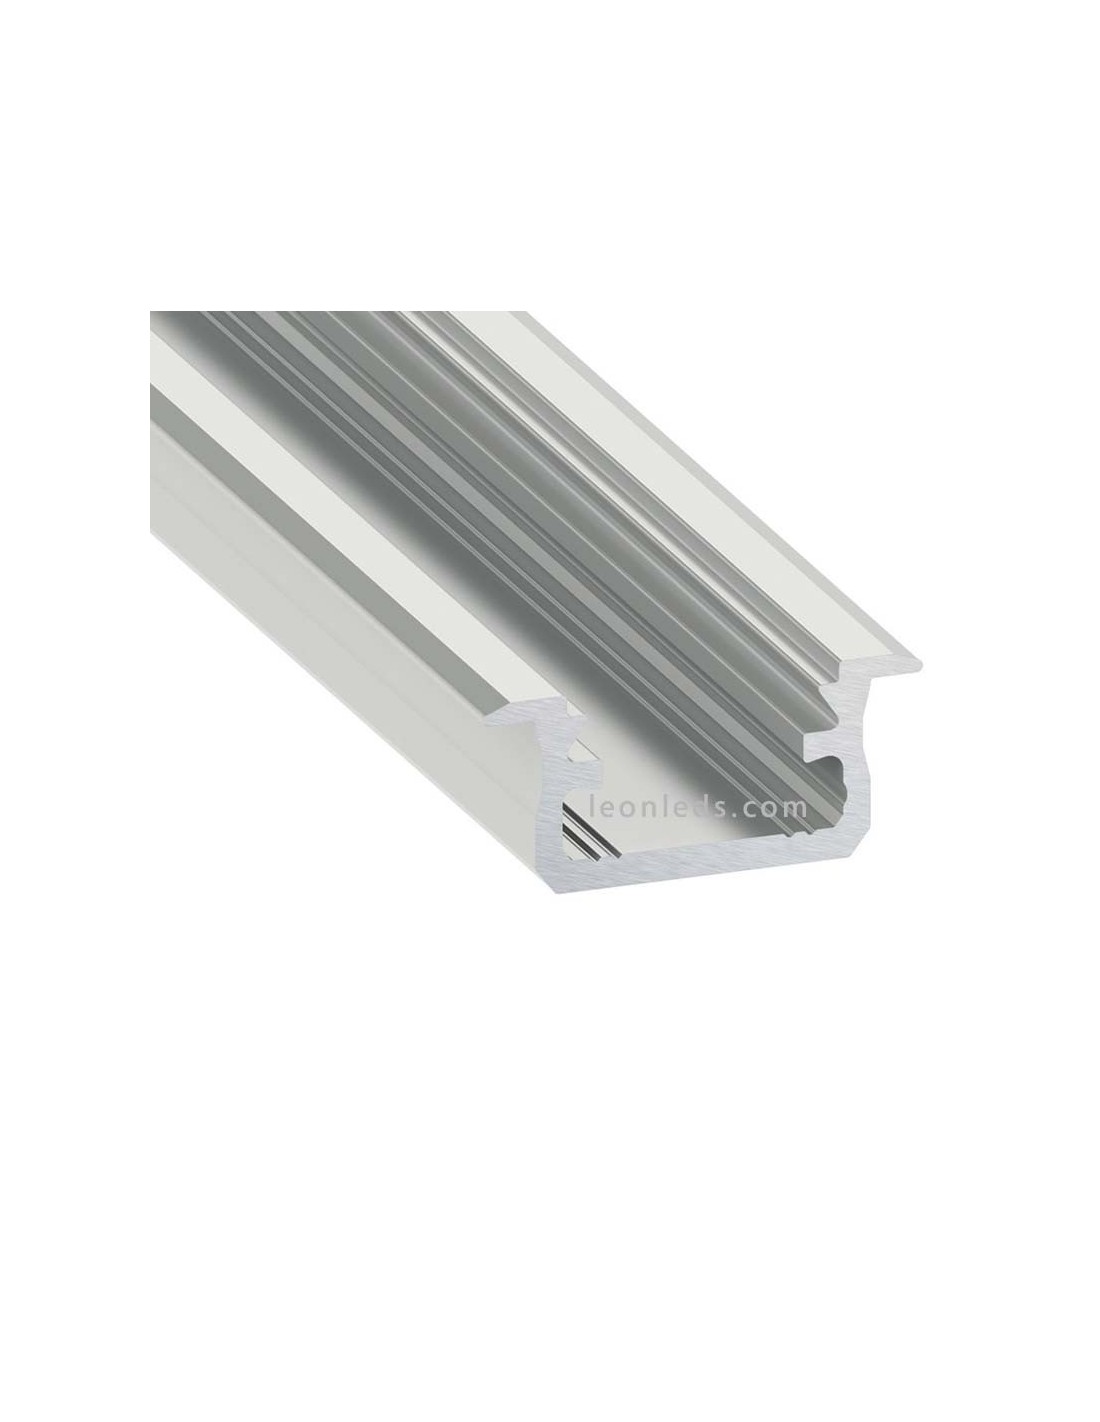 Perfil aluminio para Empotrar tira LED Modelo Tipo B